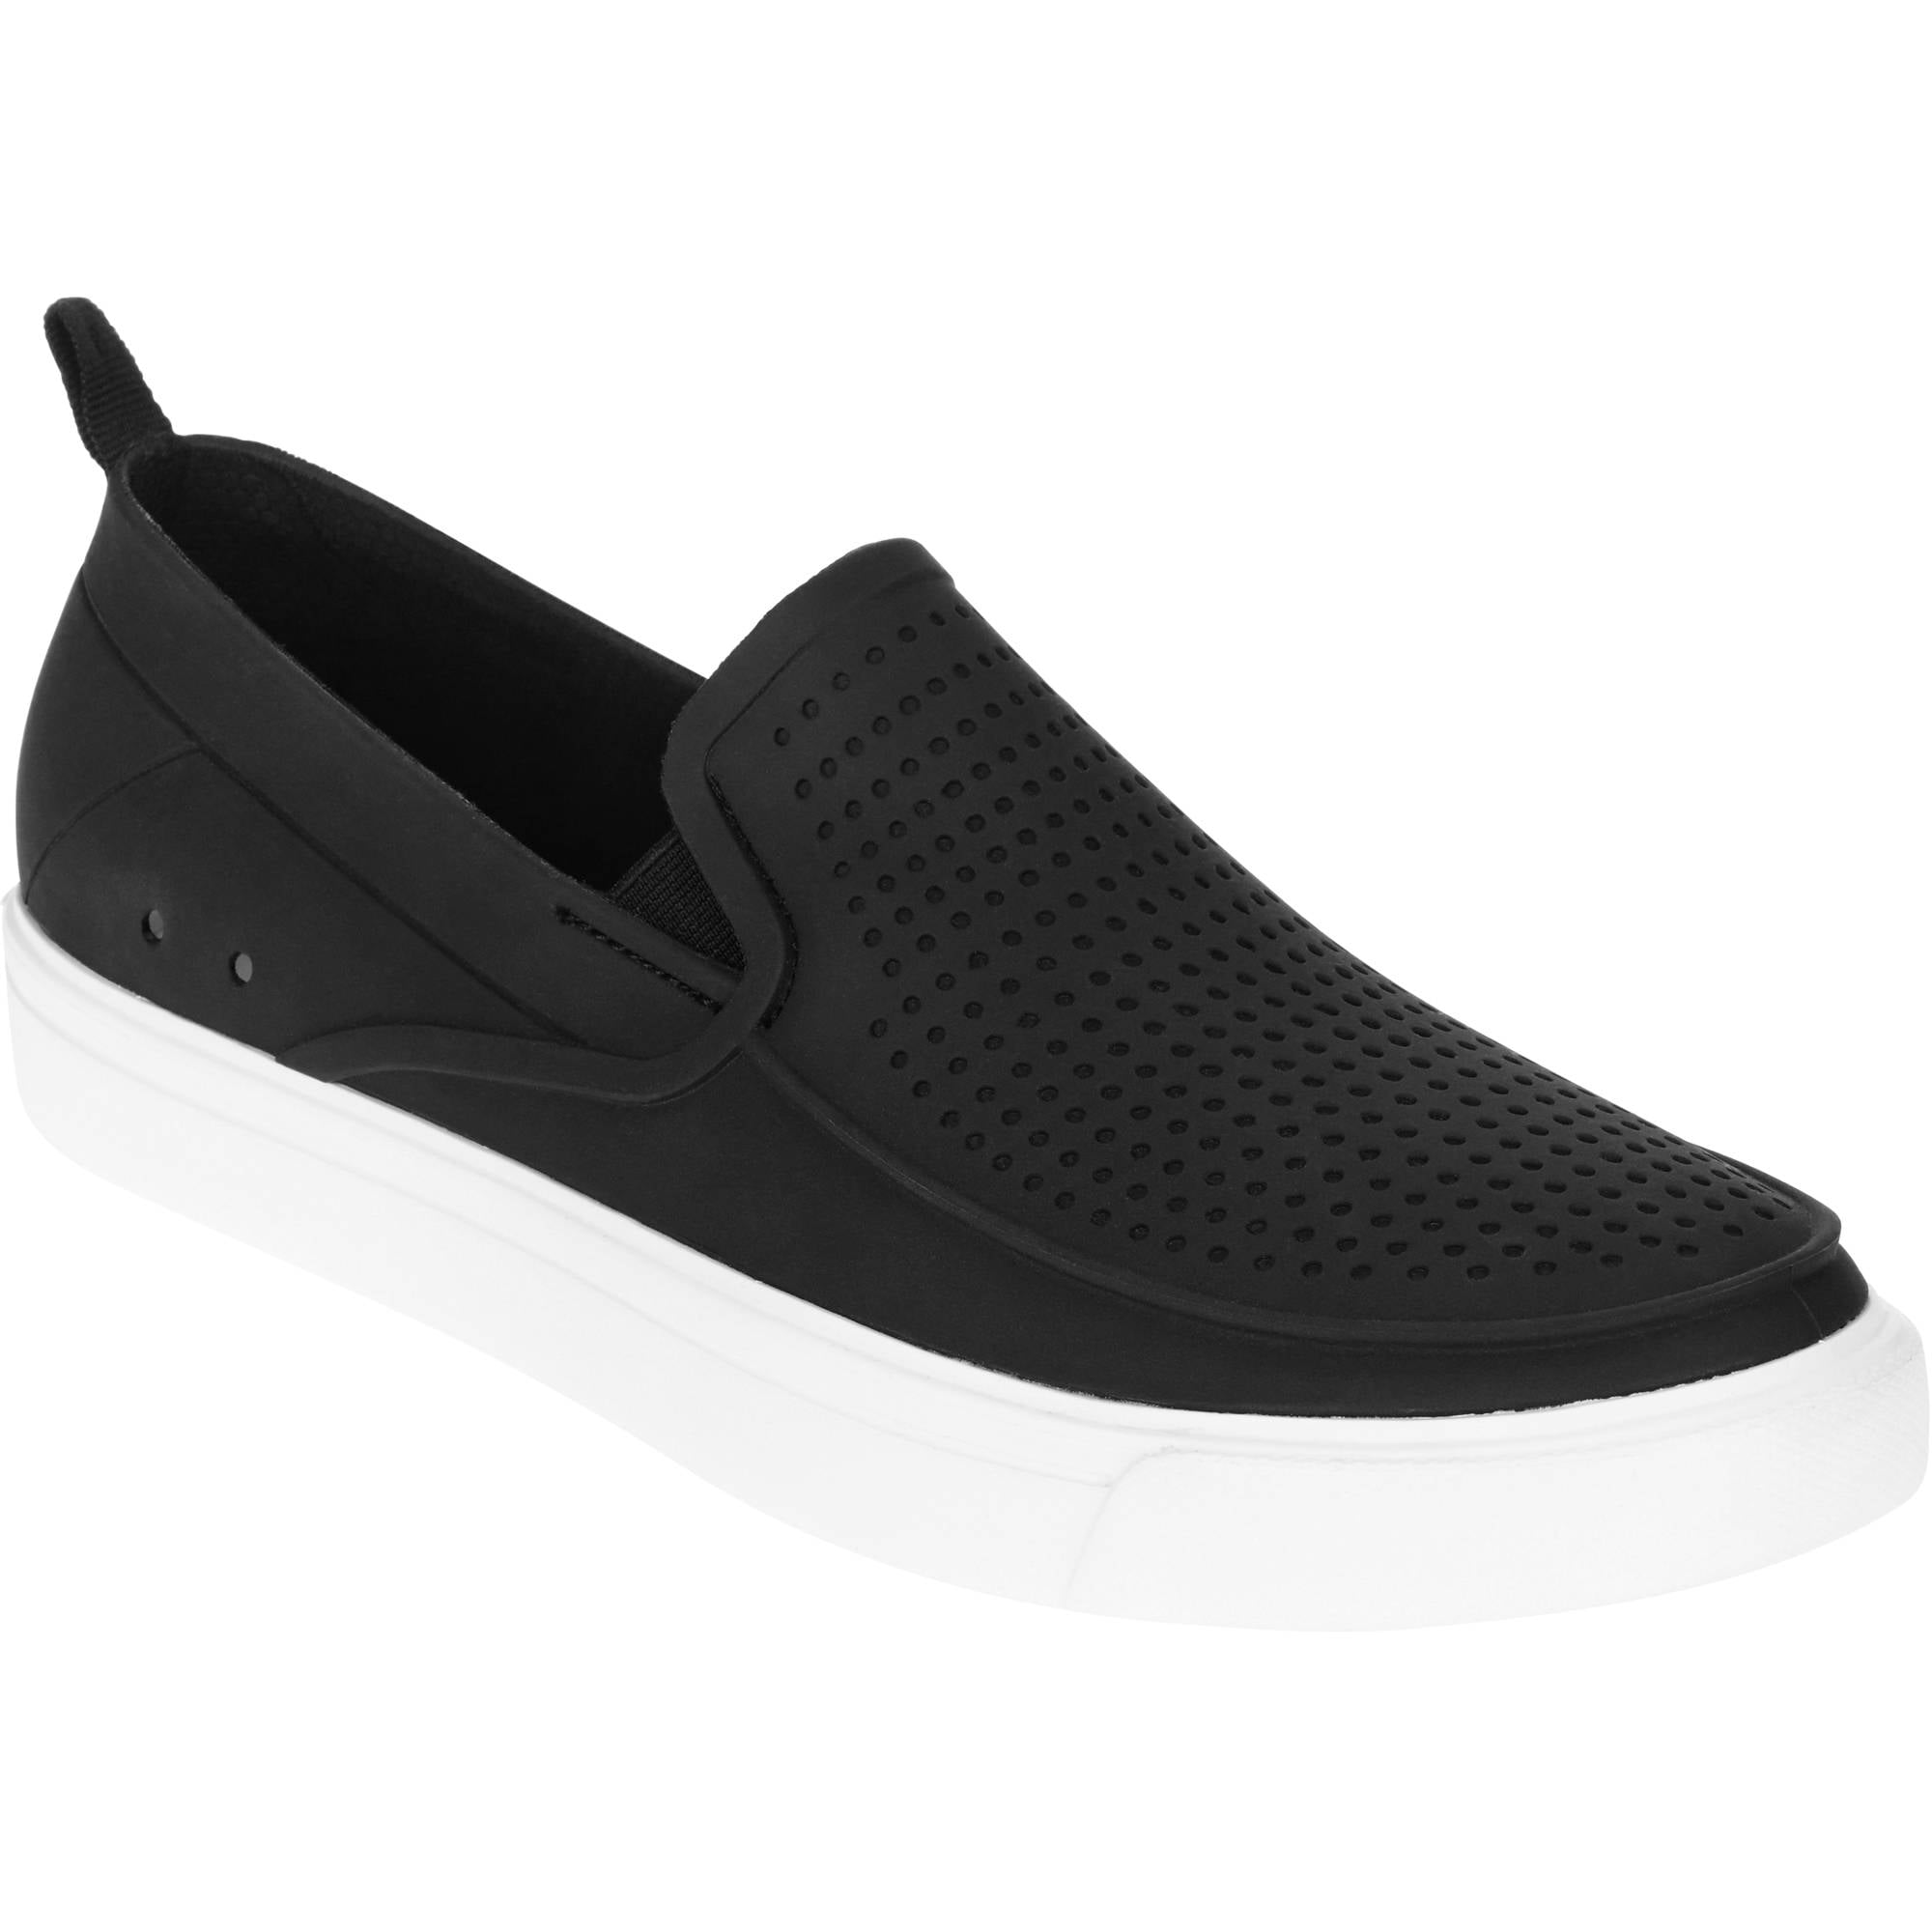 Men's Casual Slip-On Shoe - Walmart.com 